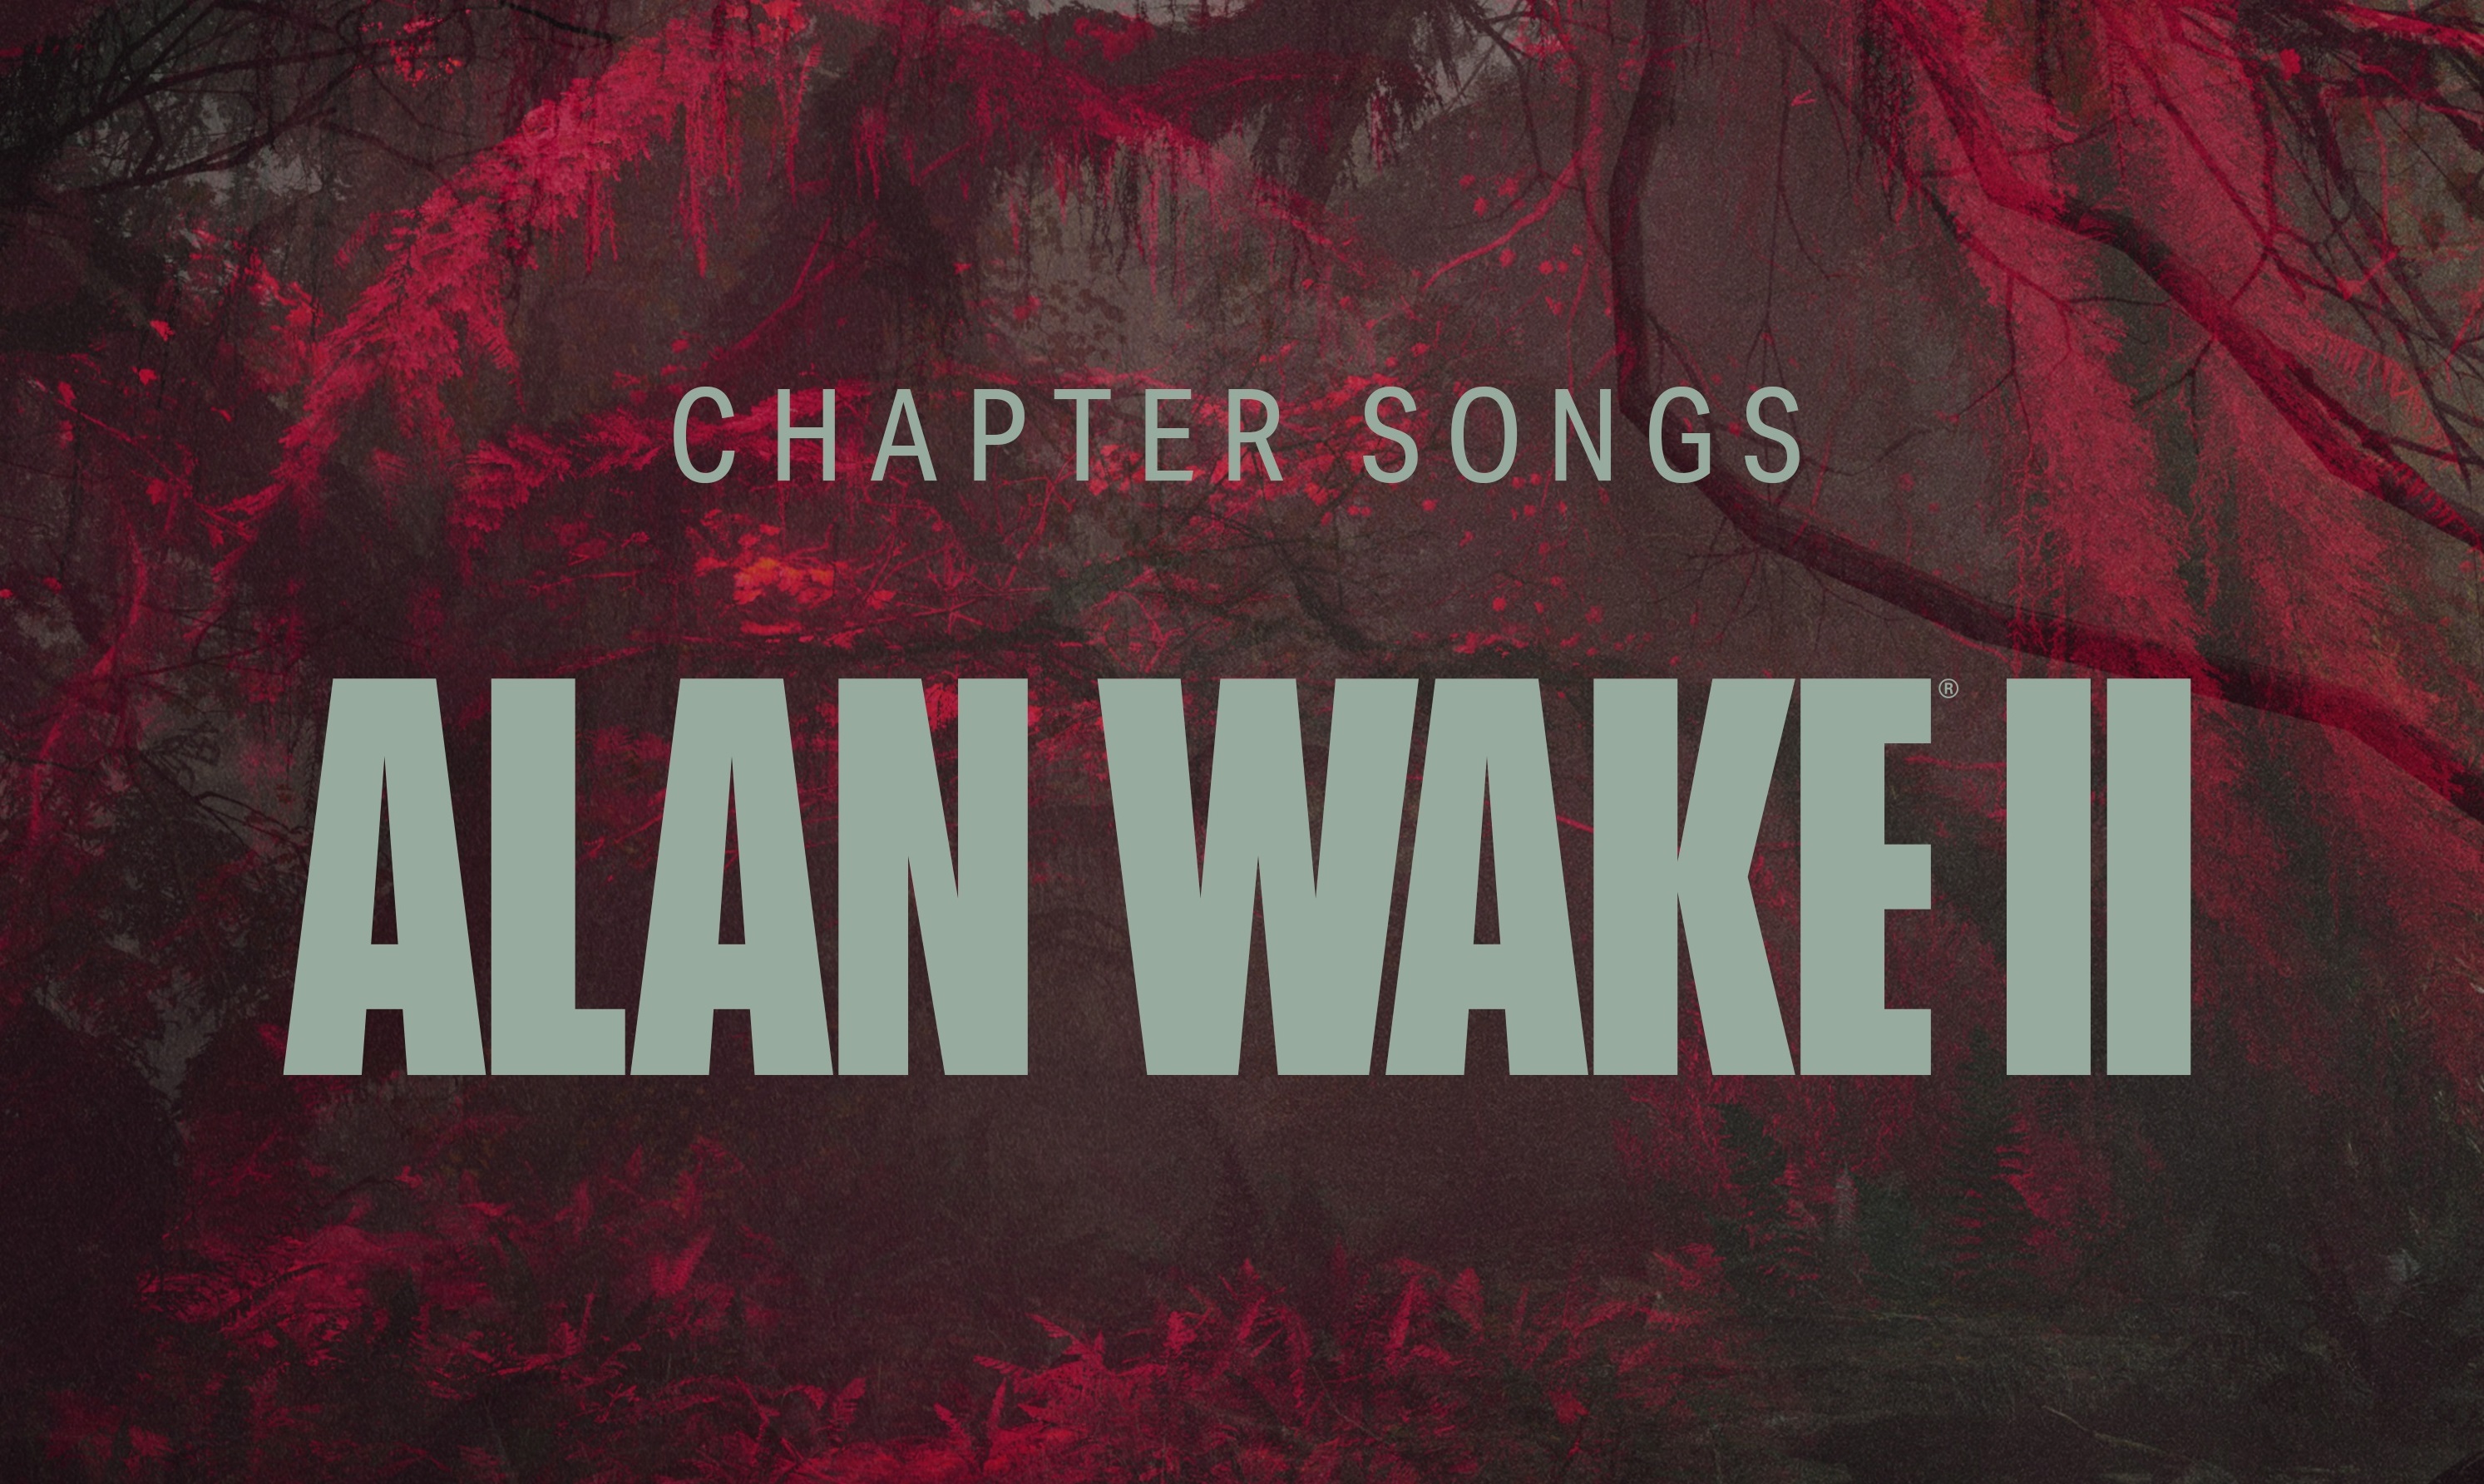 Alan Wake 2 - Remedy Entertaiment